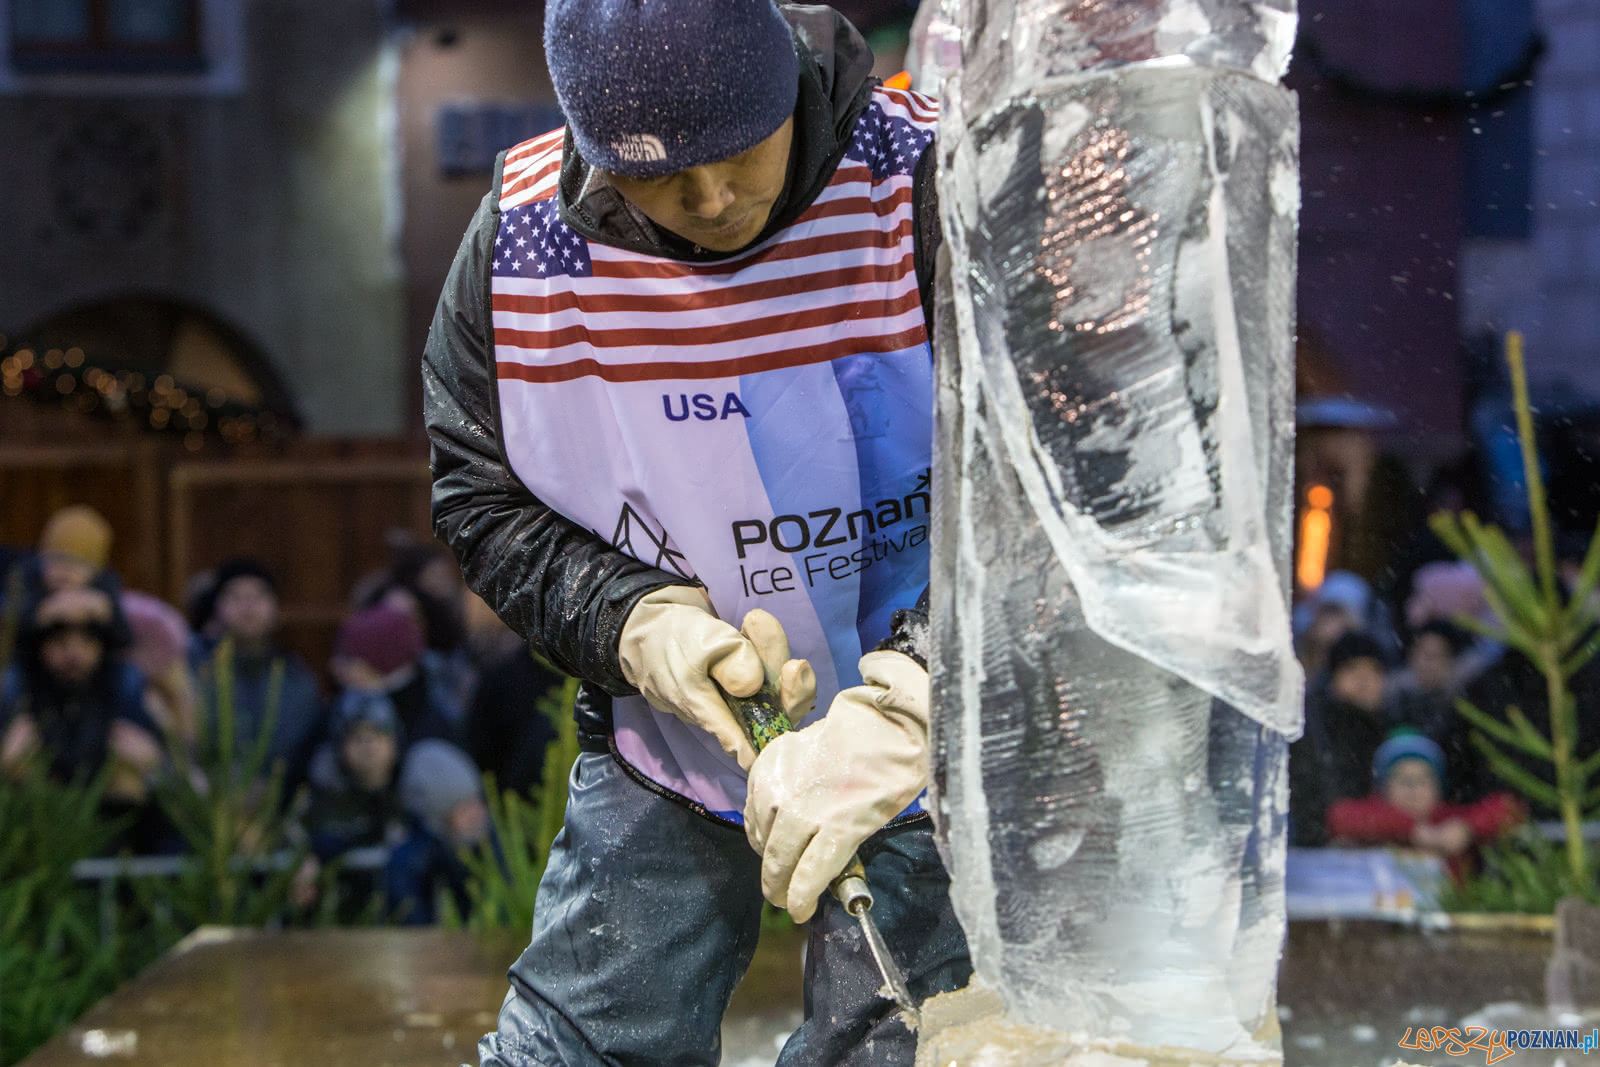 Poznan Ice Festival 2018 - Speed Ice Carving - Poznań 08.12.201  Foto: LepszyPOZNAN.pl / Paweł Rychter